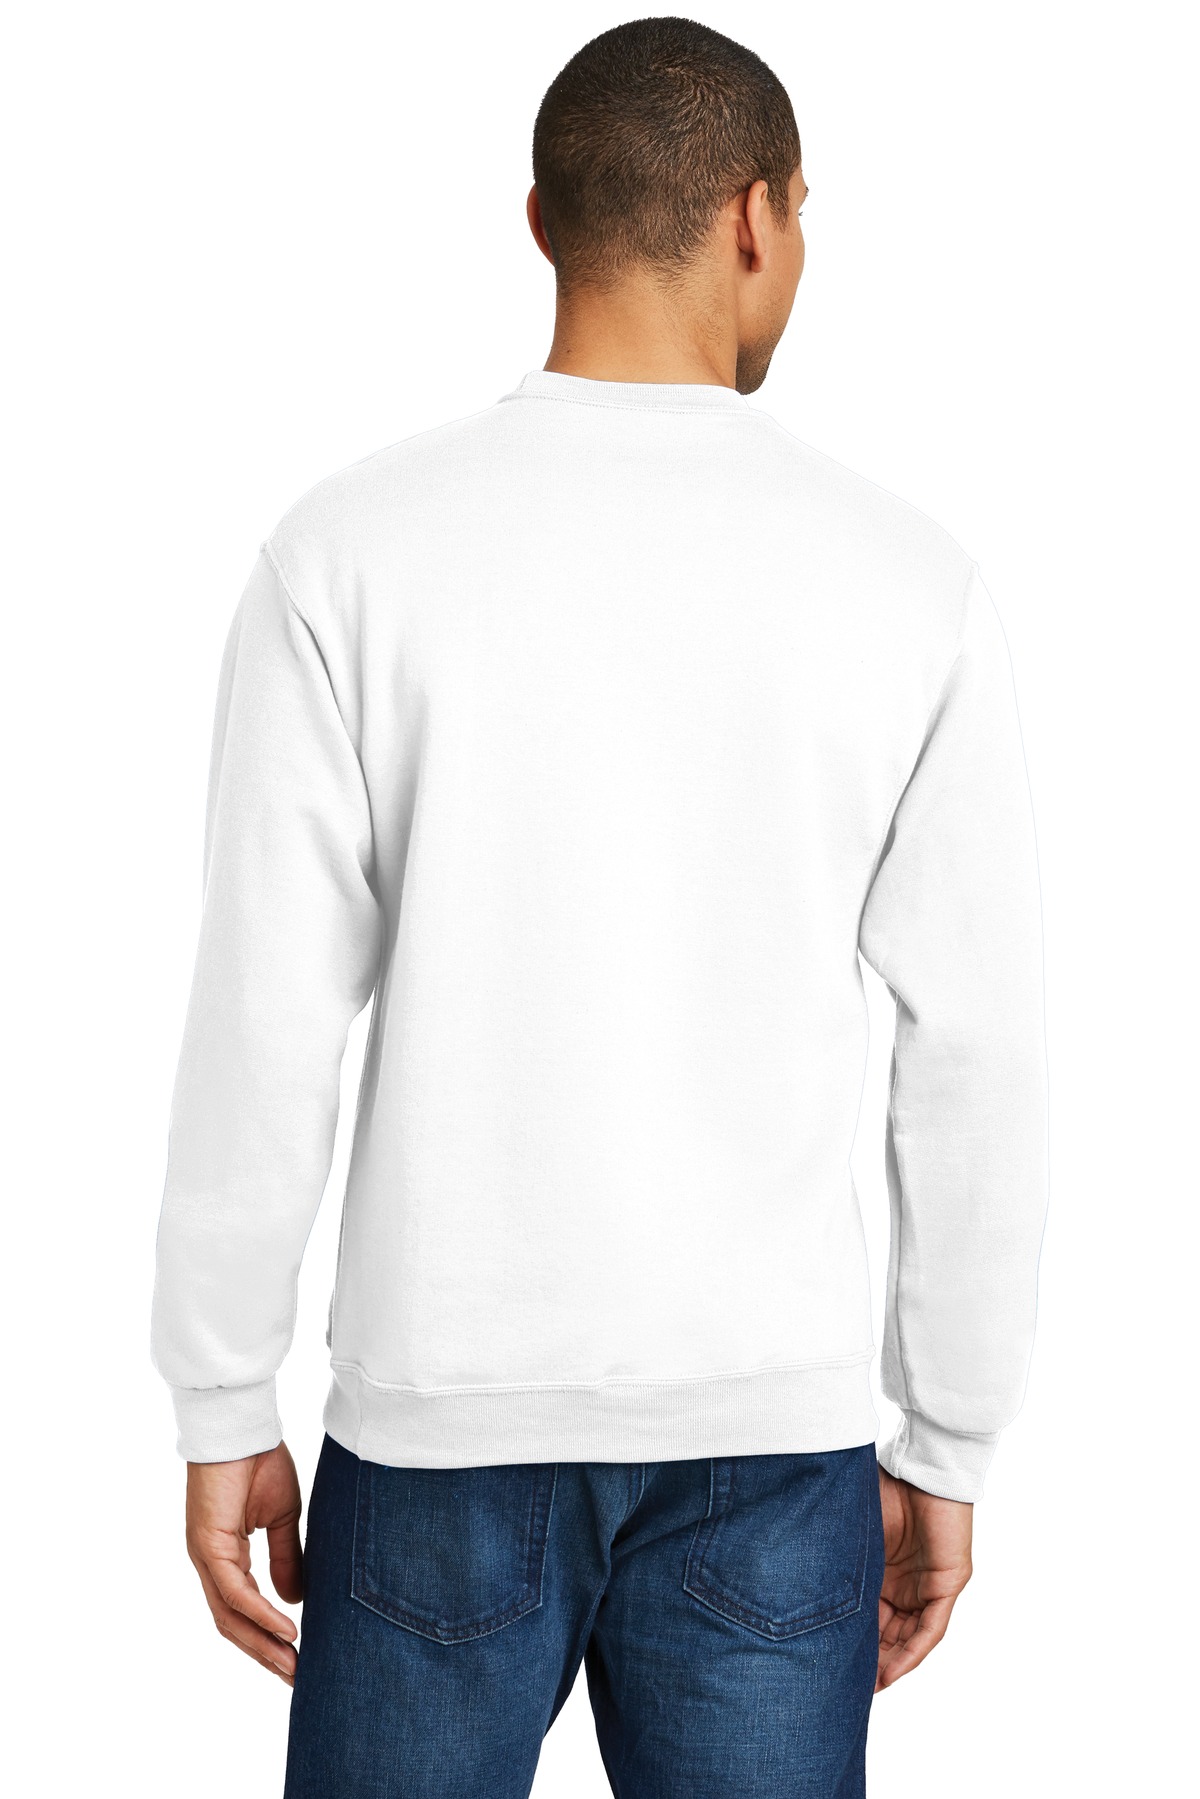 JERZEES ® - NuBlend ® Crewneck Sweatshirt. 562M - Custom Shirt Shop